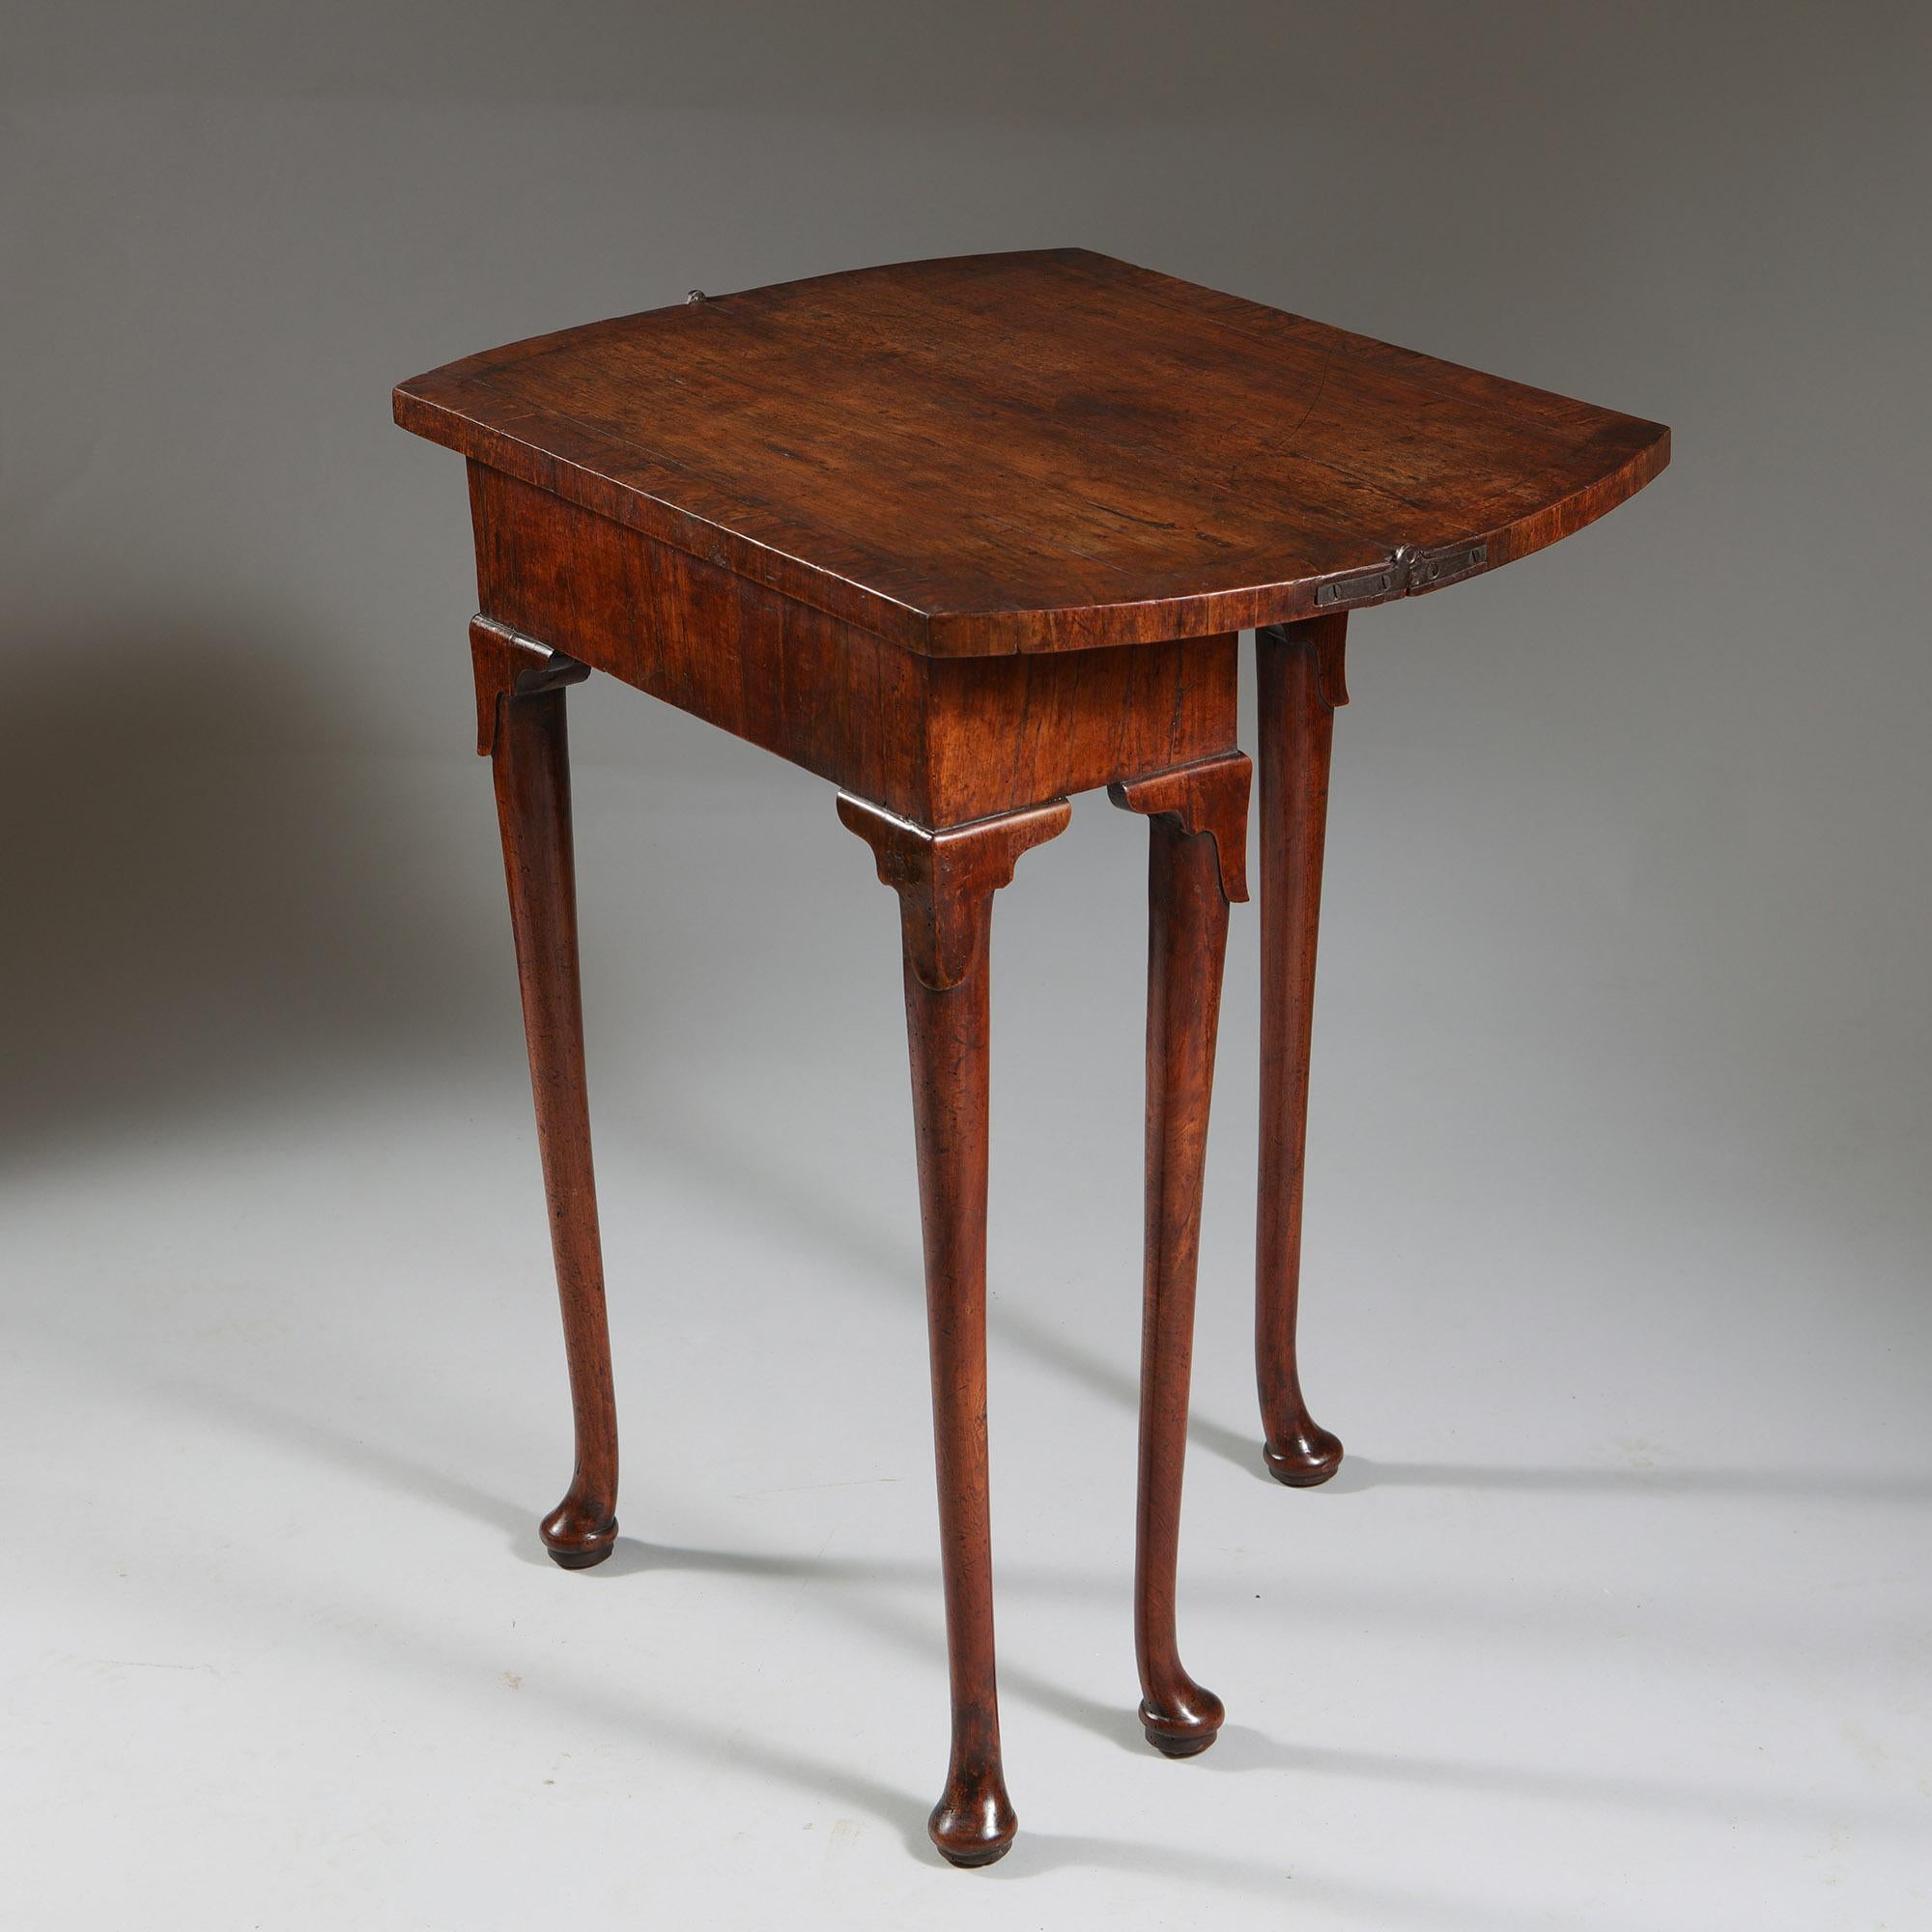 A Unique Early 18th Century Diminutive George I Figured Walnut Bachelors Table-3